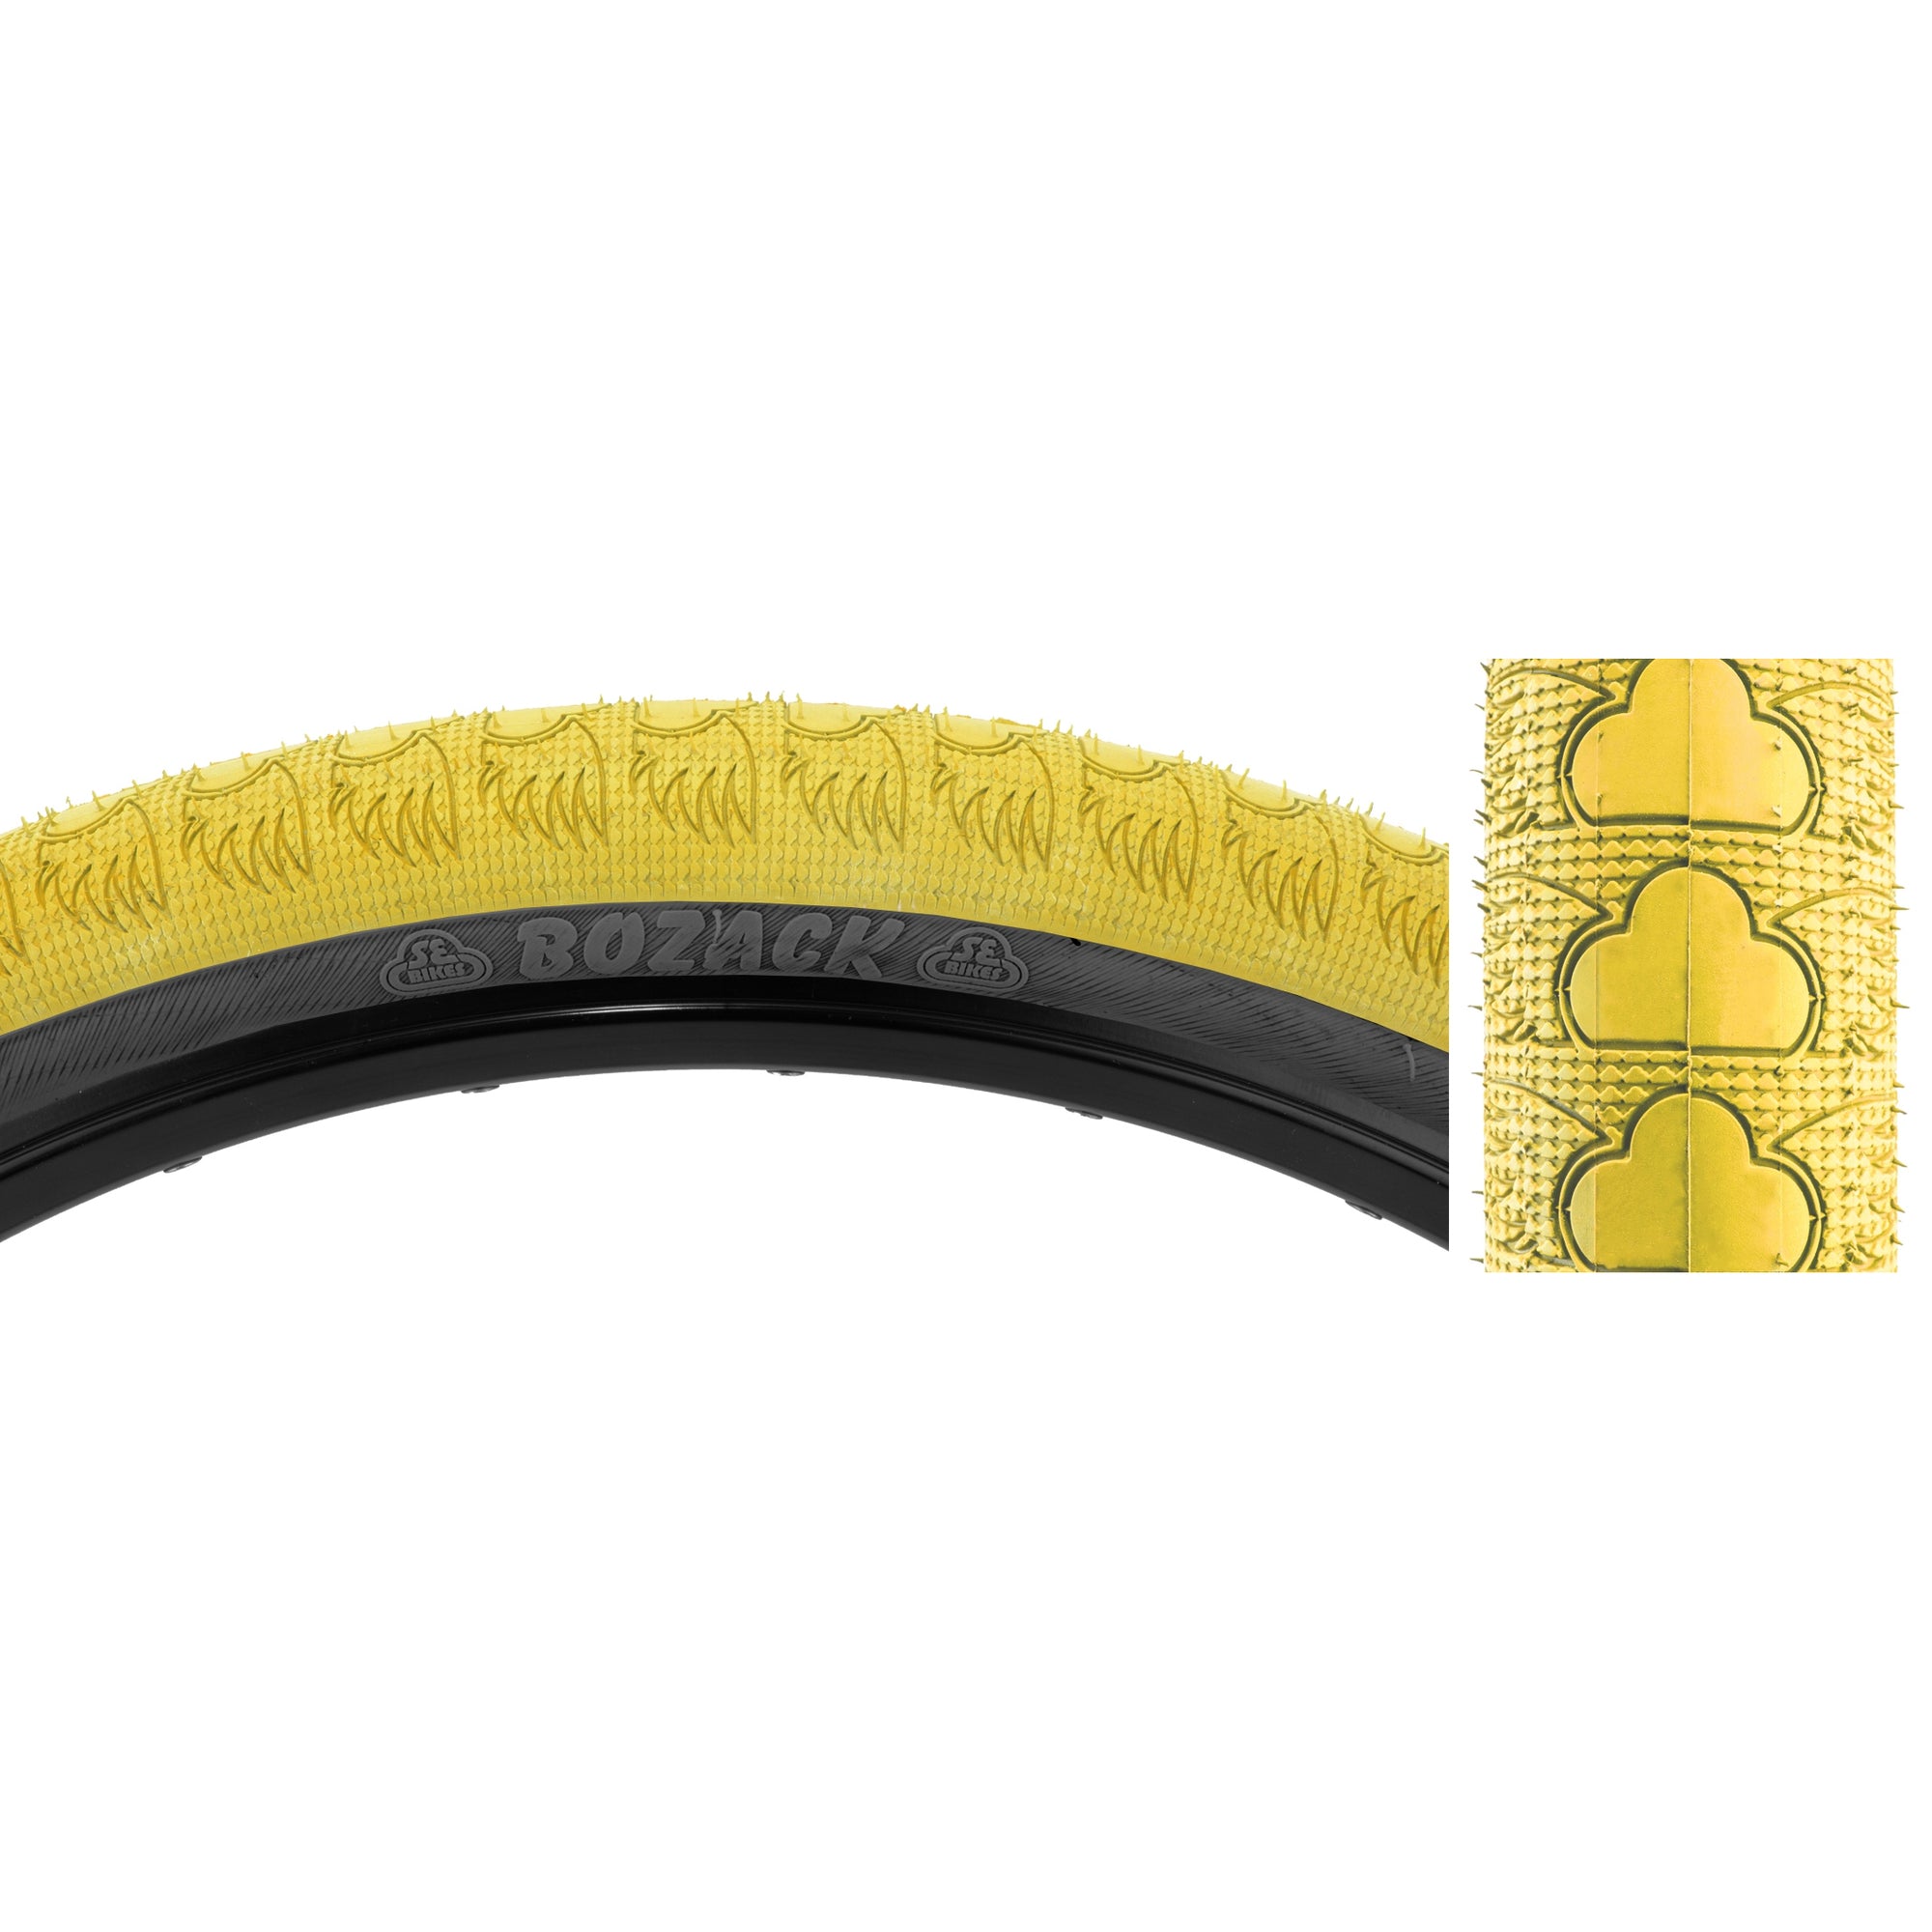 24x2.4 SE Racing Bozack BMX Tire - Yellow w/ Black Sidewall